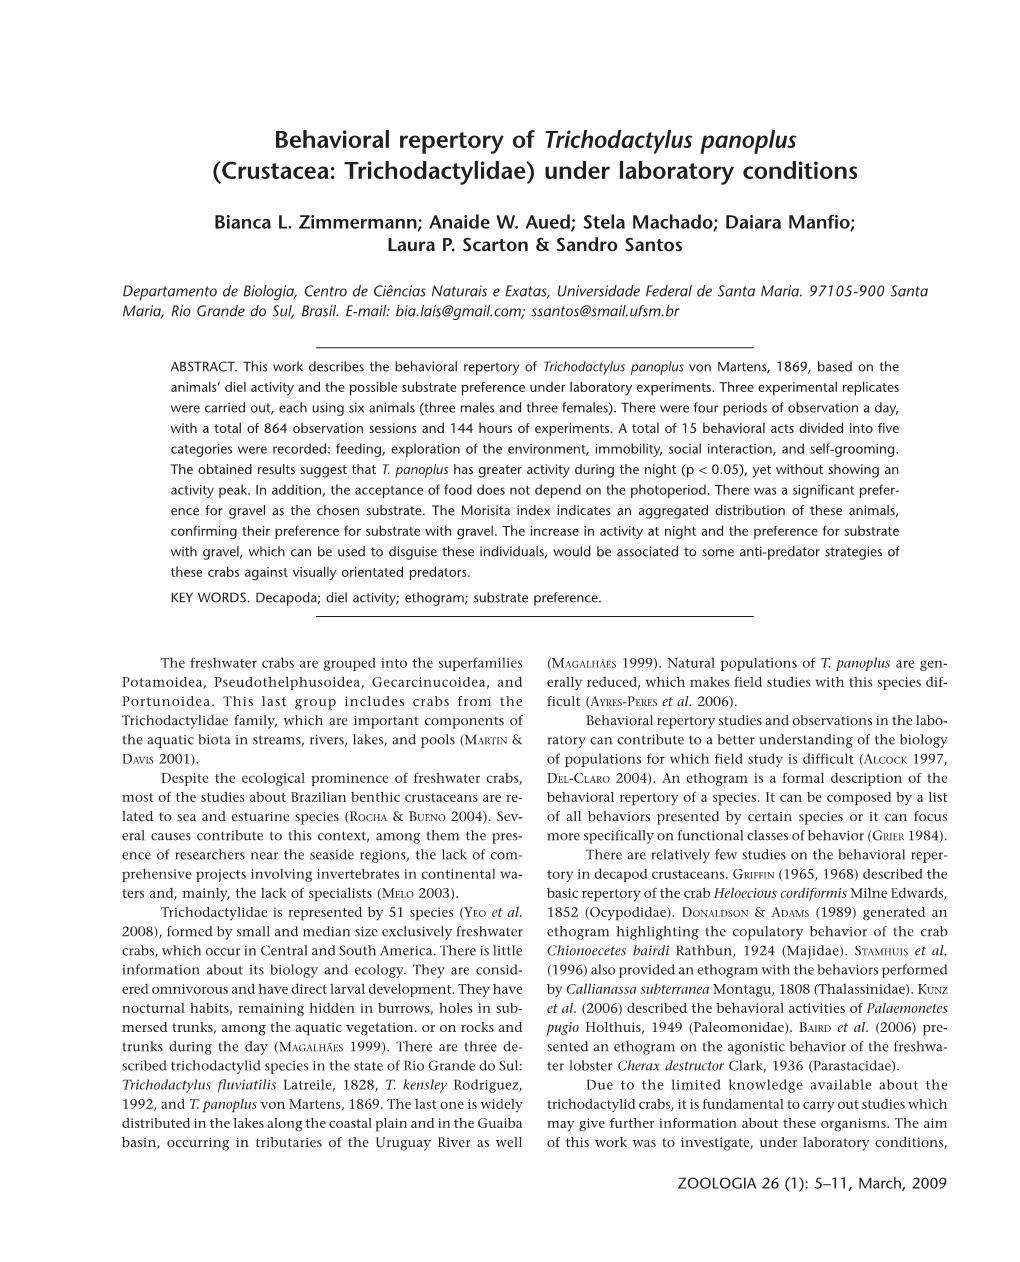 Behavioral Repertory of Trichodactylus Panoplus (Crustacea: Trichodactylidae) Under Laboratory Conditions